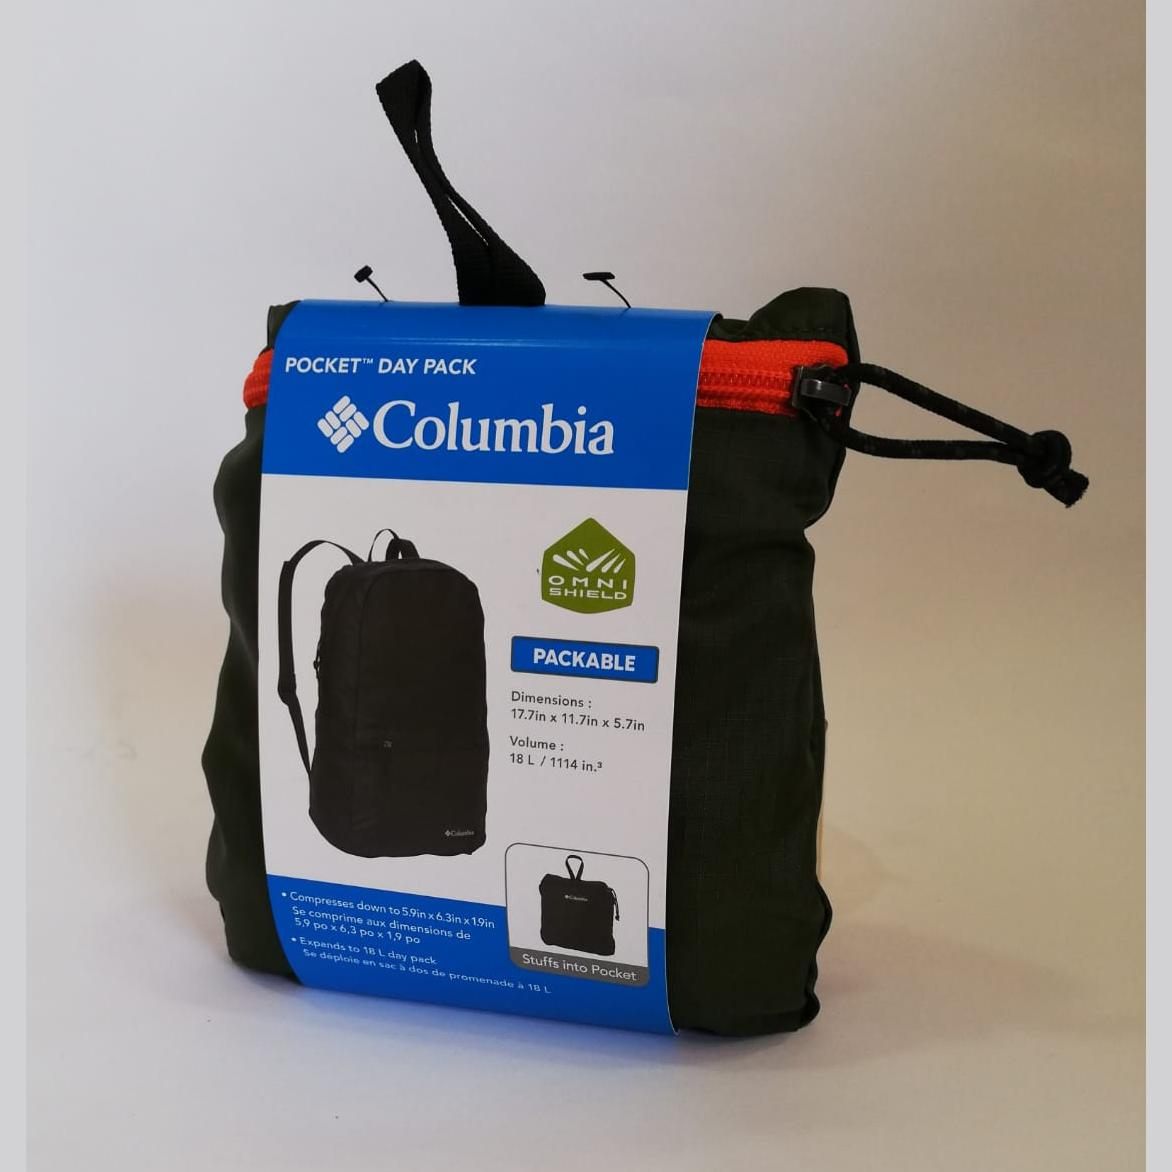 Salveque de bolsillo Columbia (Pocket day pack), color verde con zipper rojo. - The Gift Shop Costa Rica